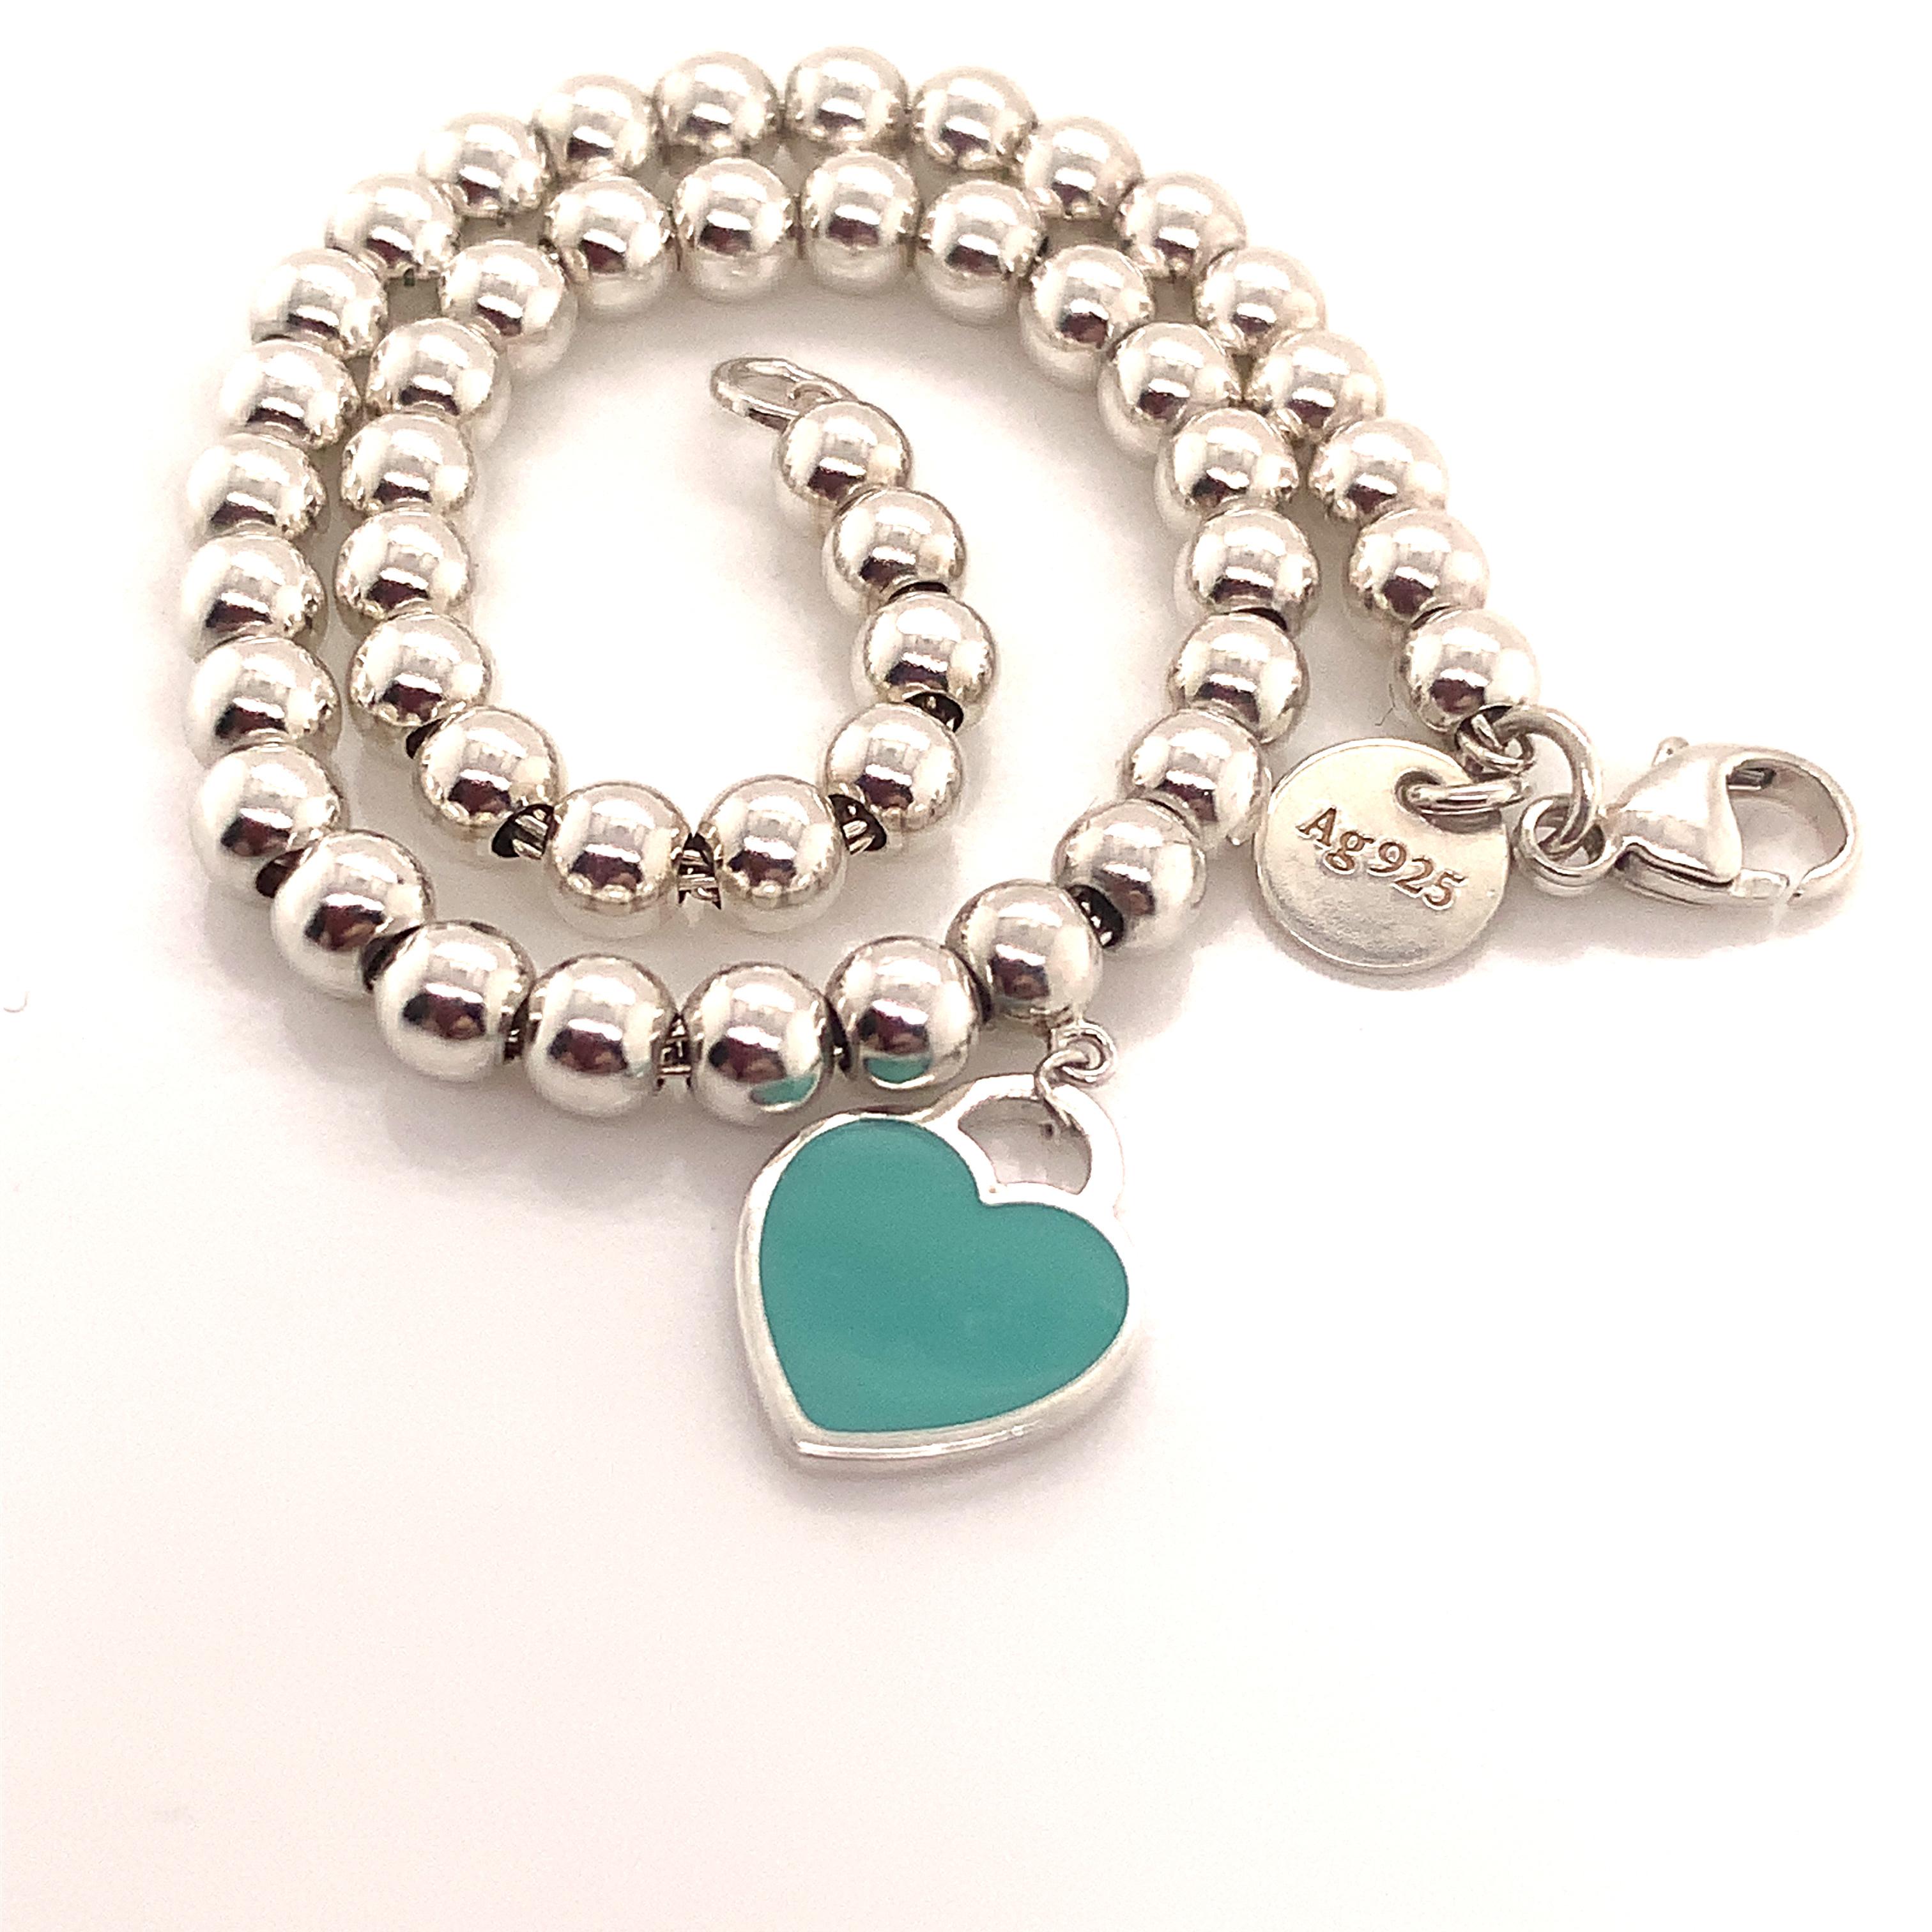 tiffany silver ball bracelet with heart